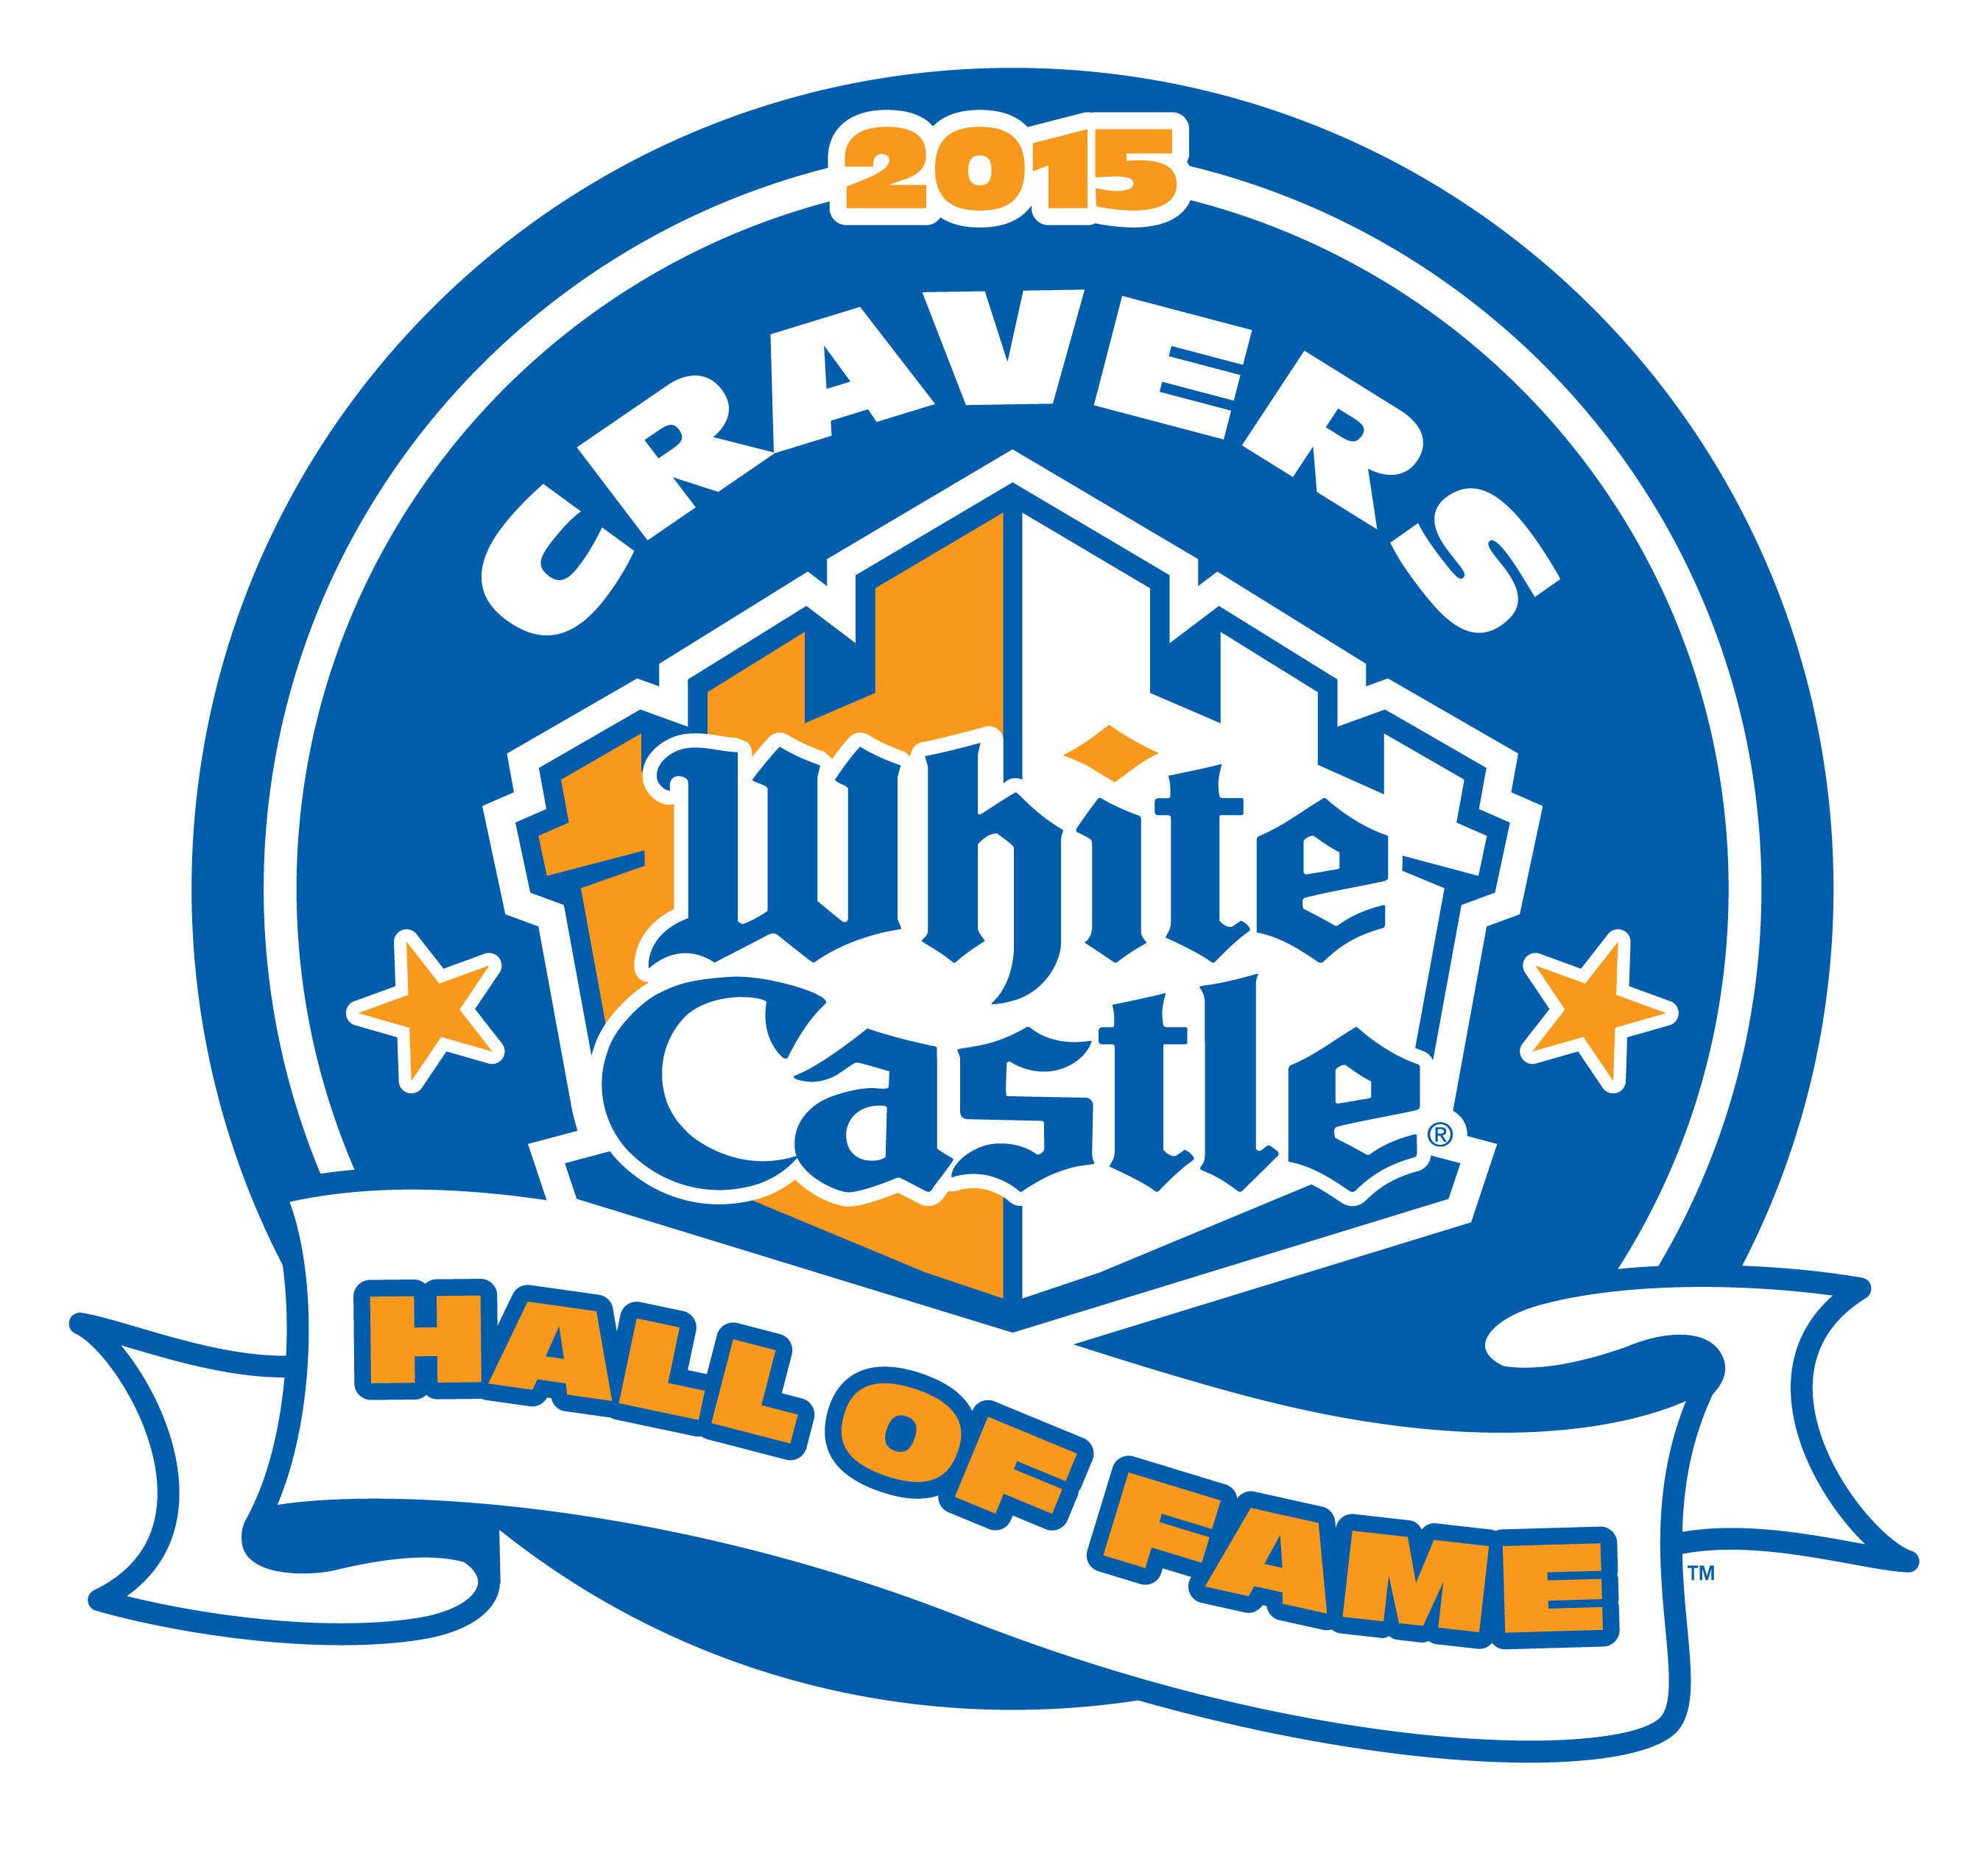 2015 Cravers Hall of Fame Logo